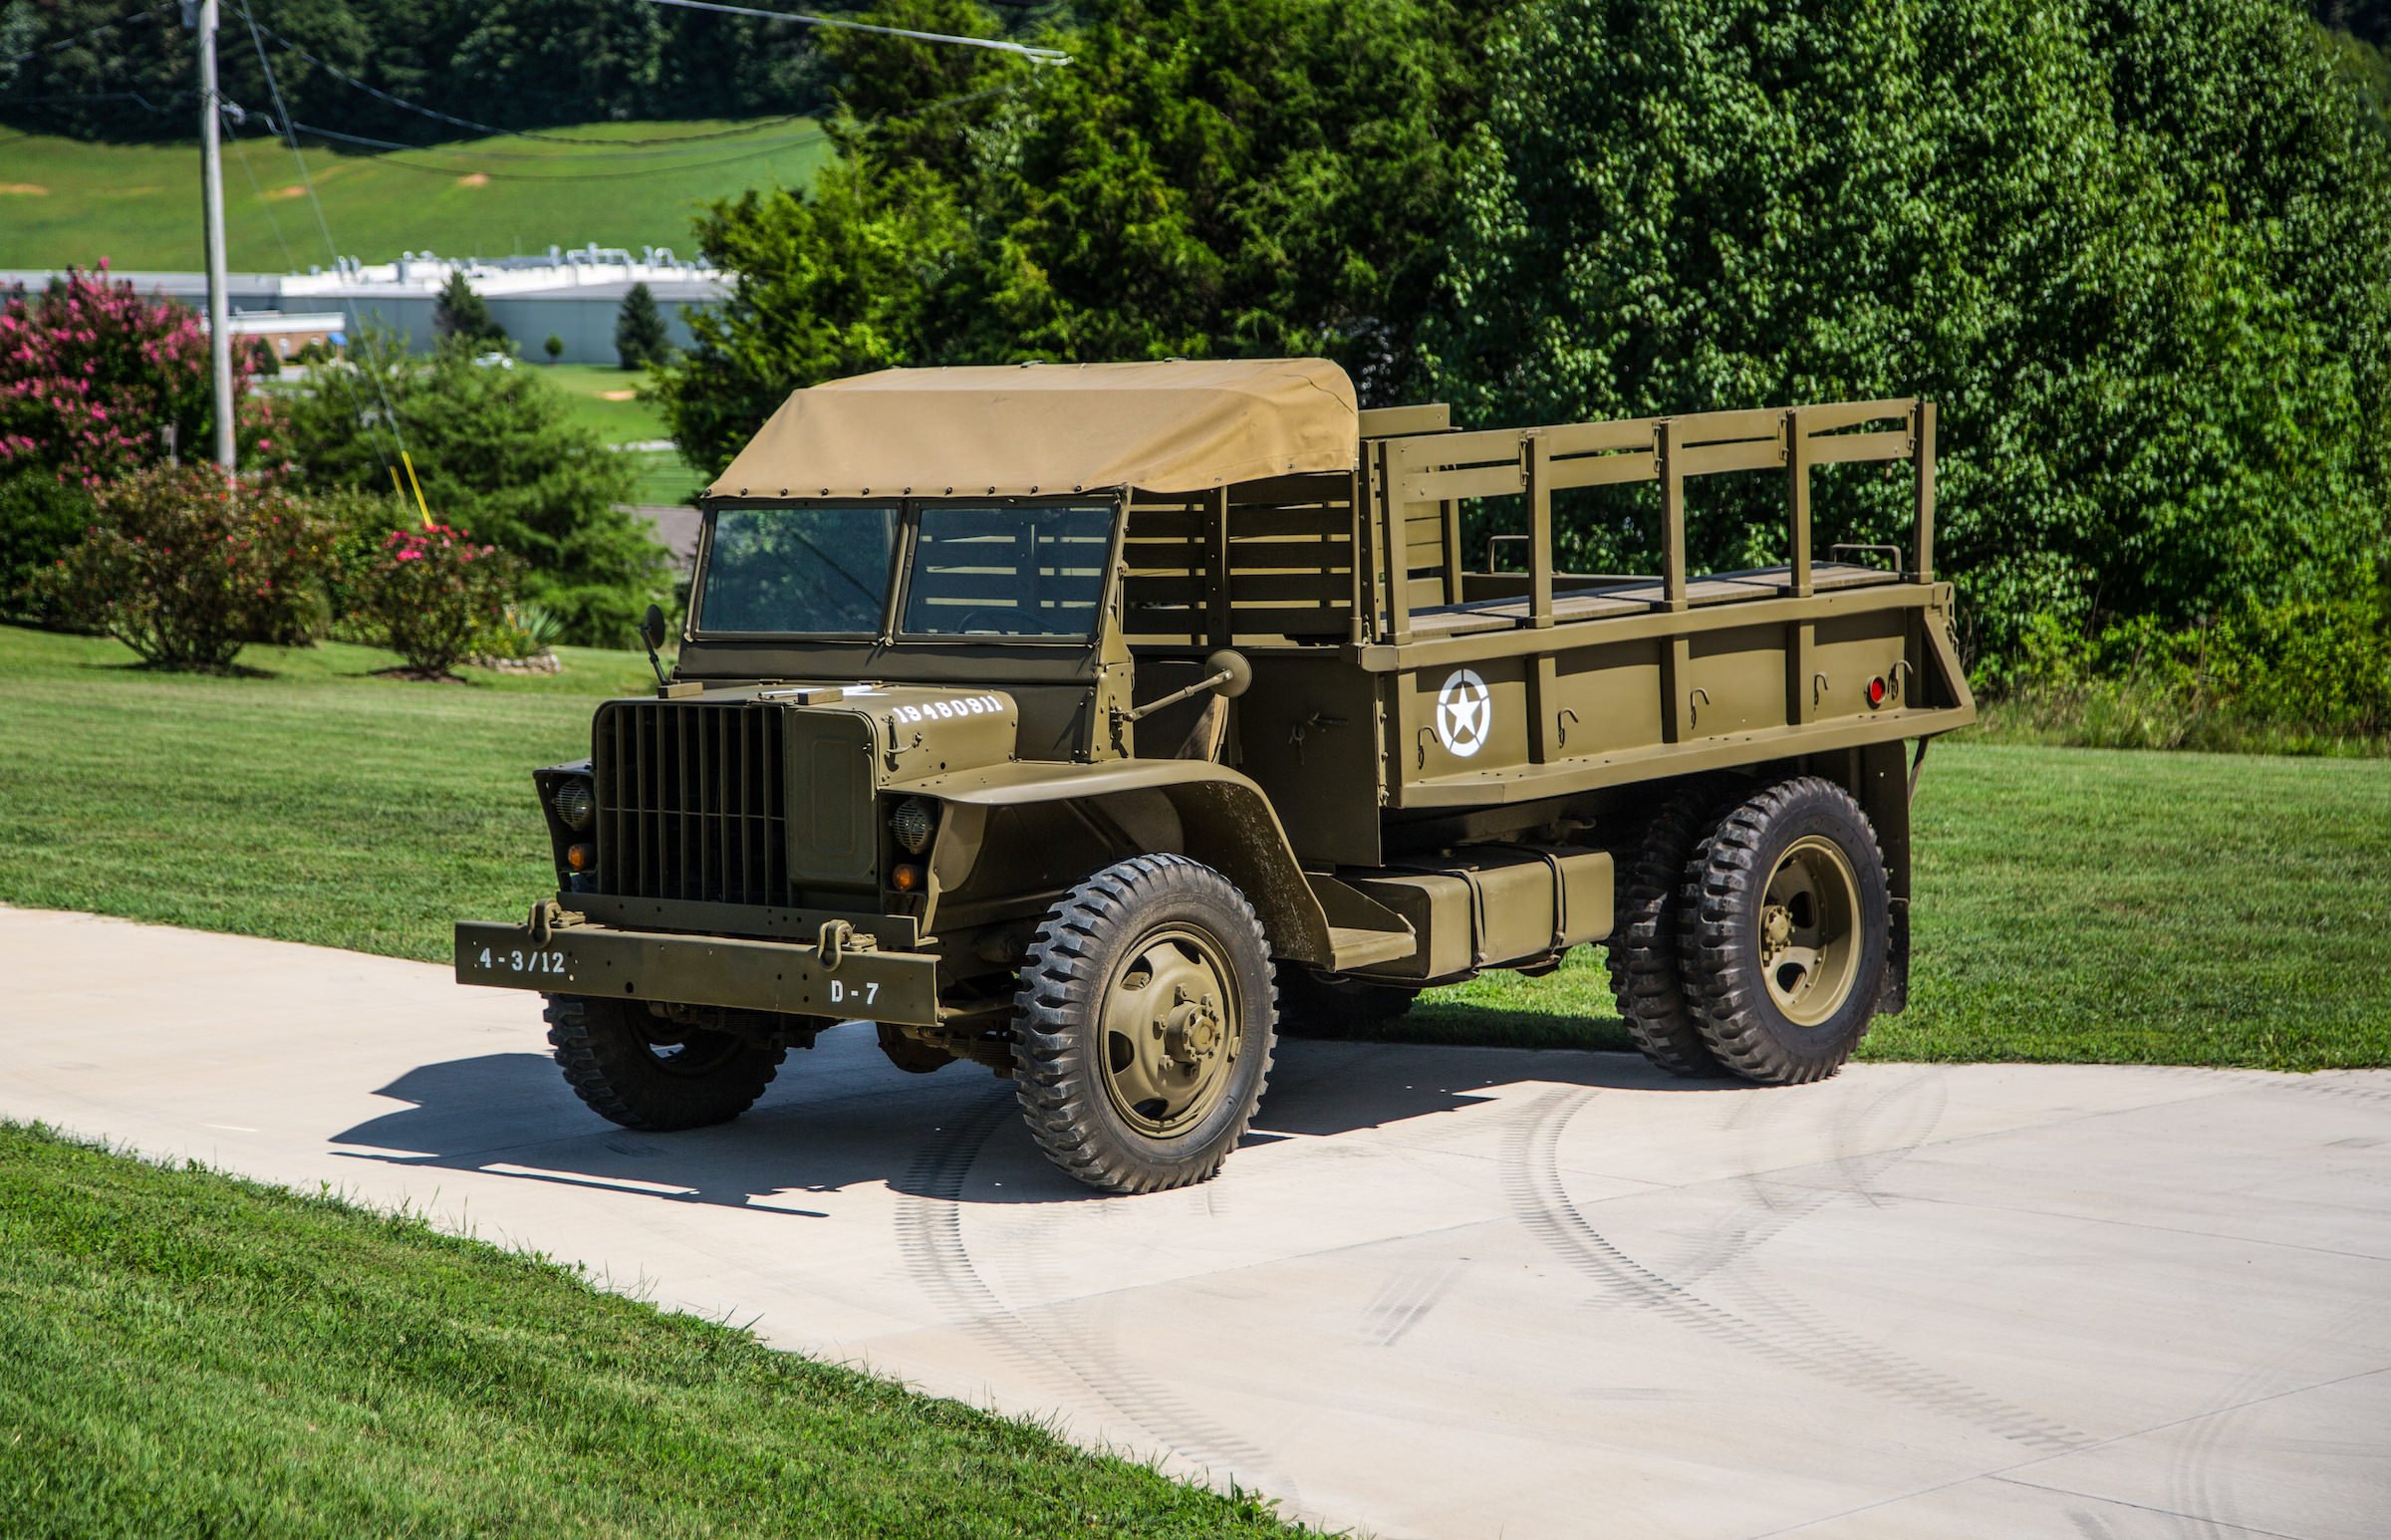 The Rare Ford Burma Jeep - A WW2-Era 4x4 Truck Capable Of Almost